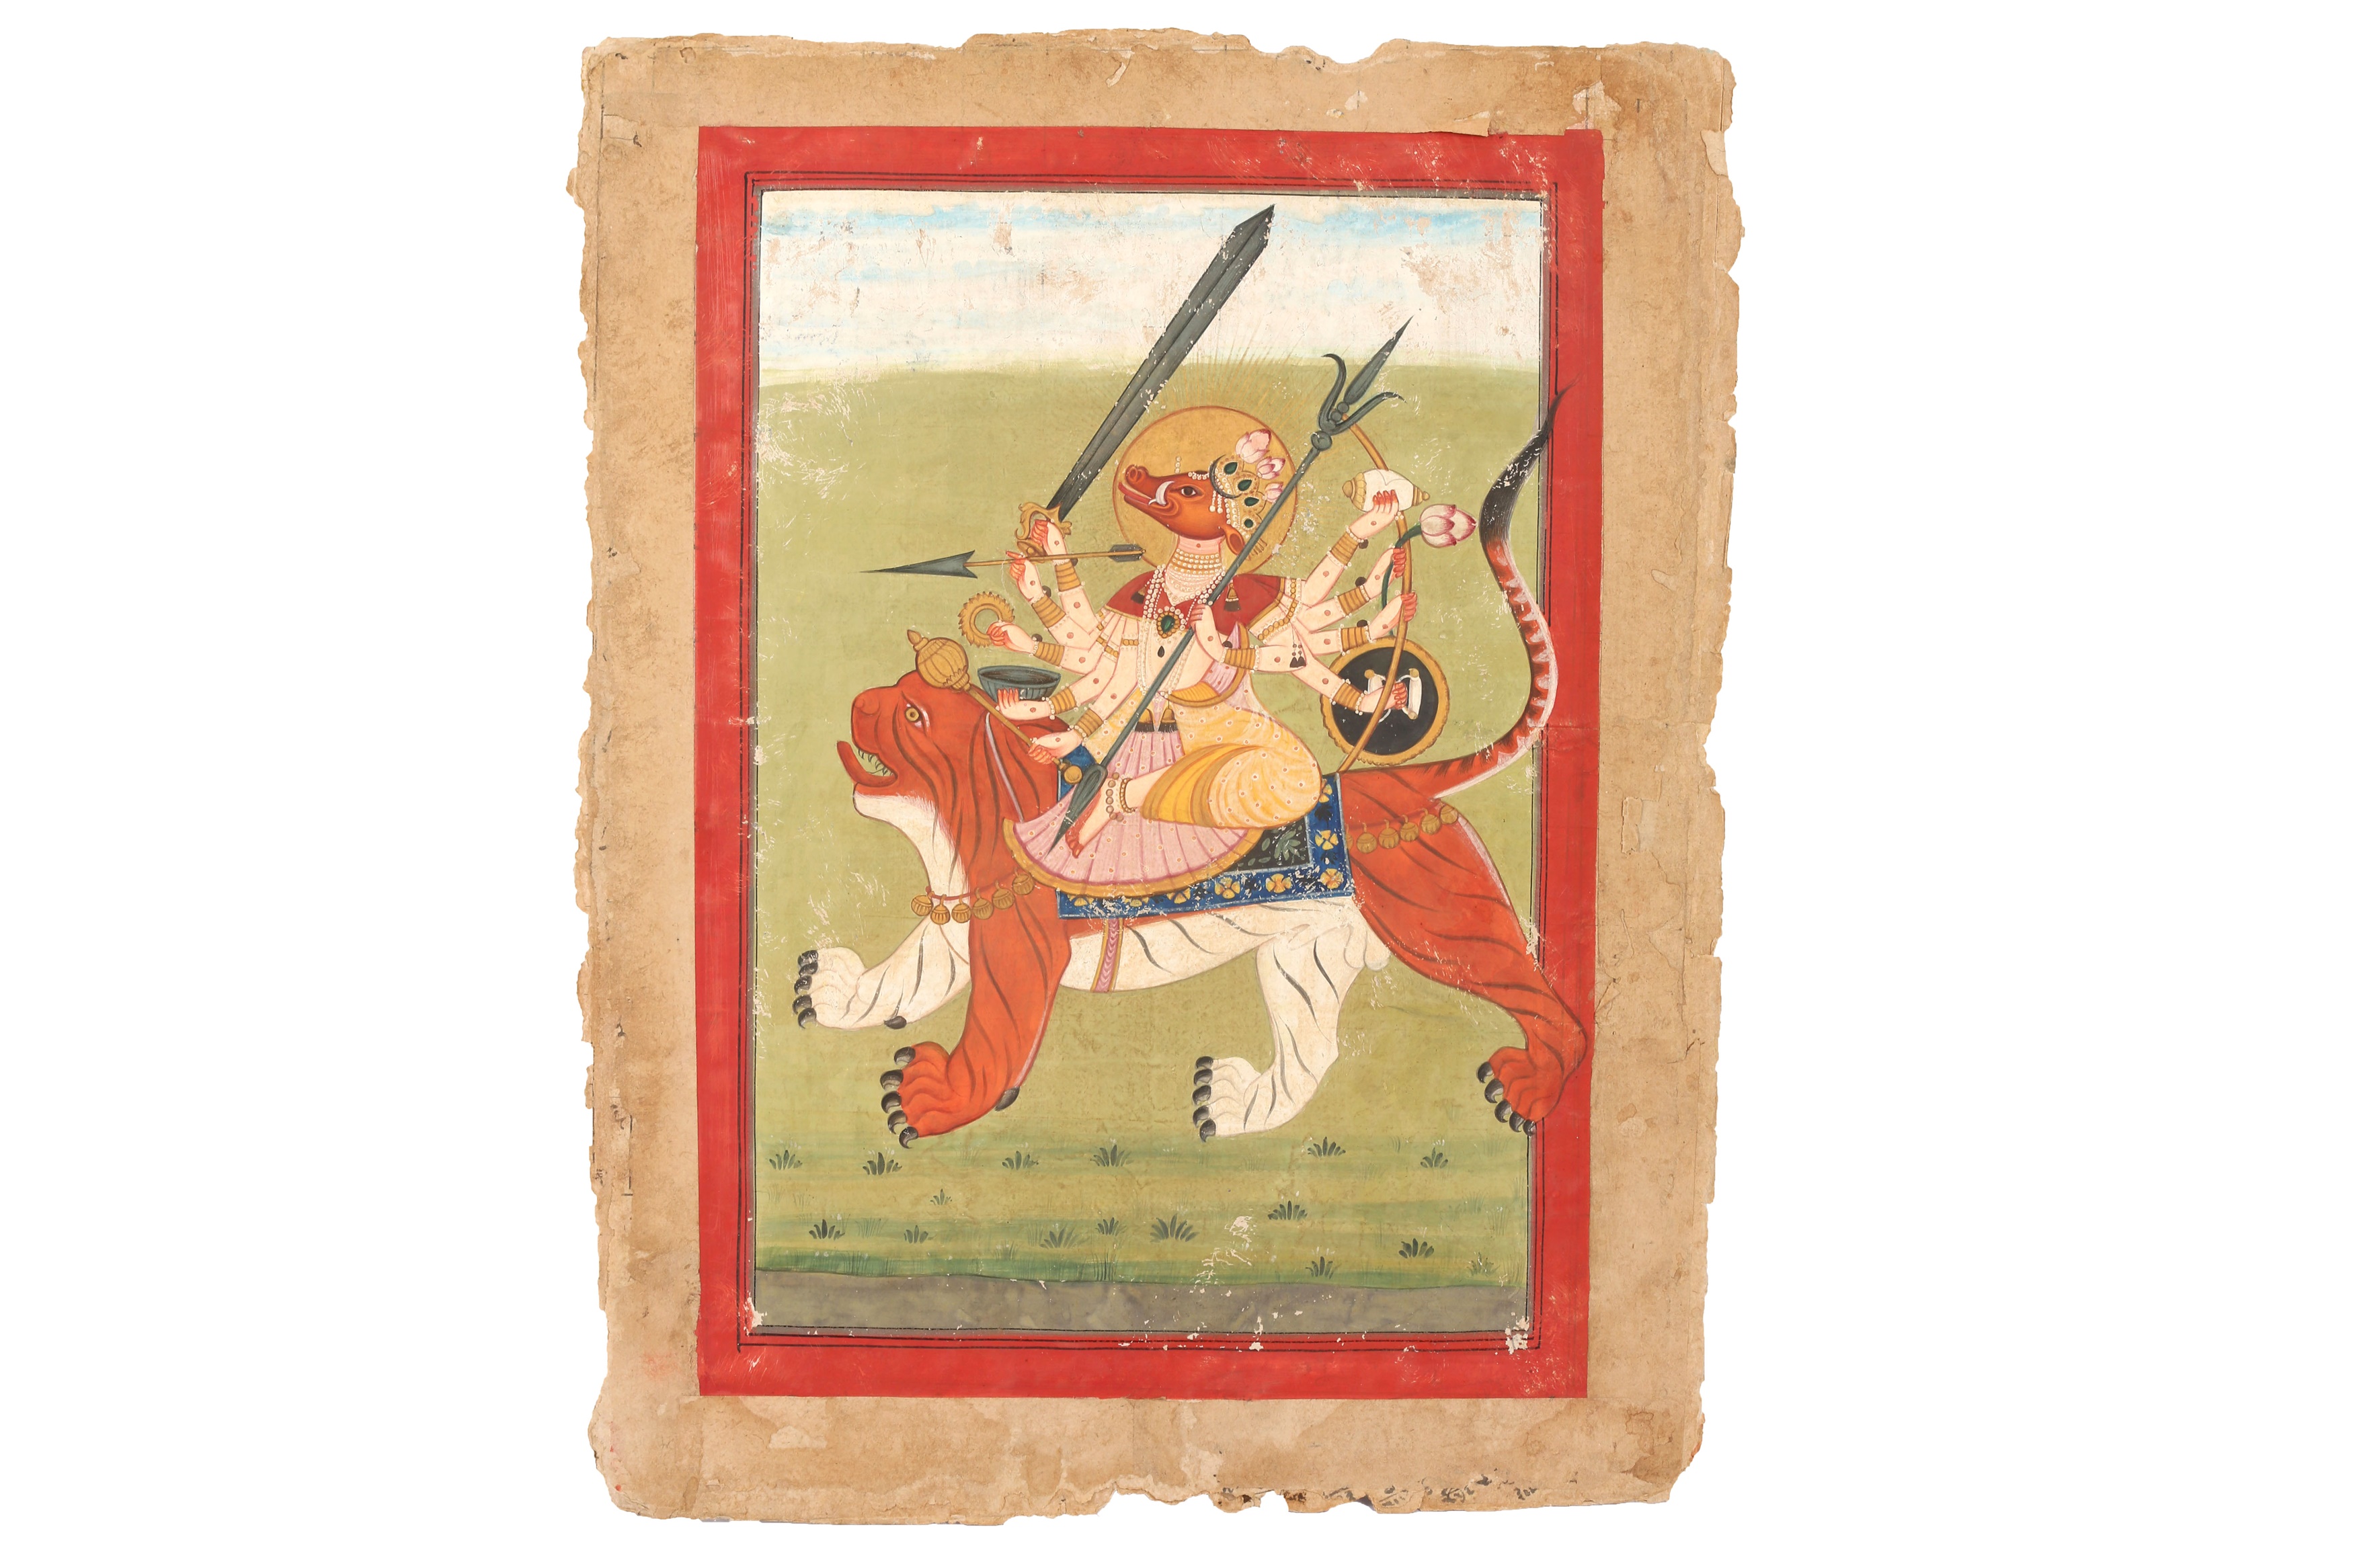 THE HINDU GODDESS DURGA SEATED ON HER MOUNT (VAHANA) - Image 2 of 5